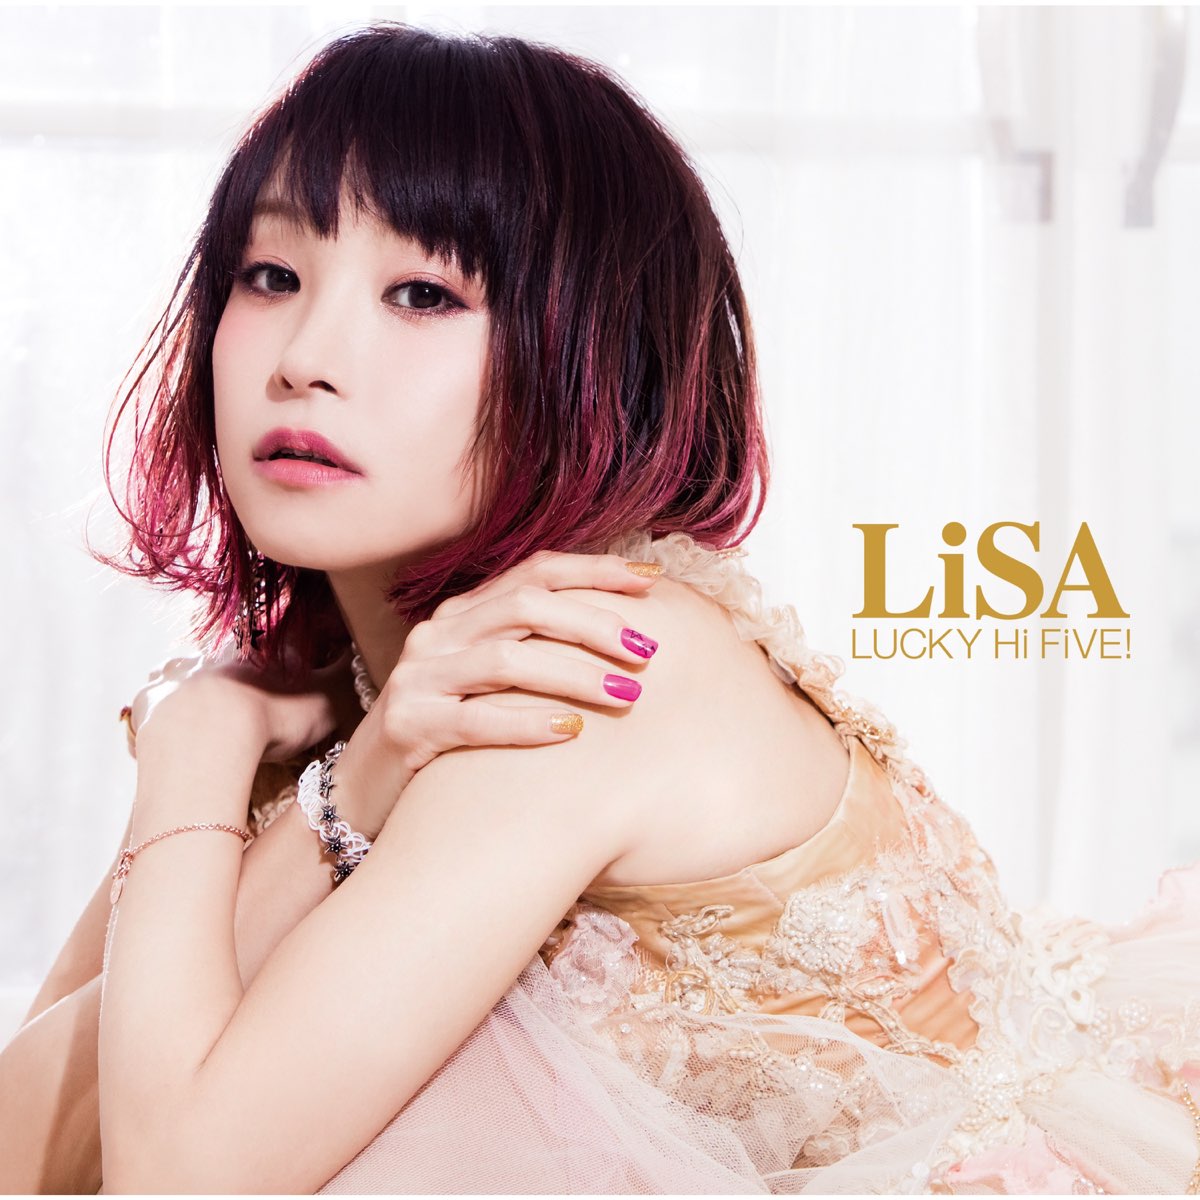 Lisa википедия. Lisa певица. Лиса японская певица. Lisa японская певица 2021. Lisa японская певица фото.